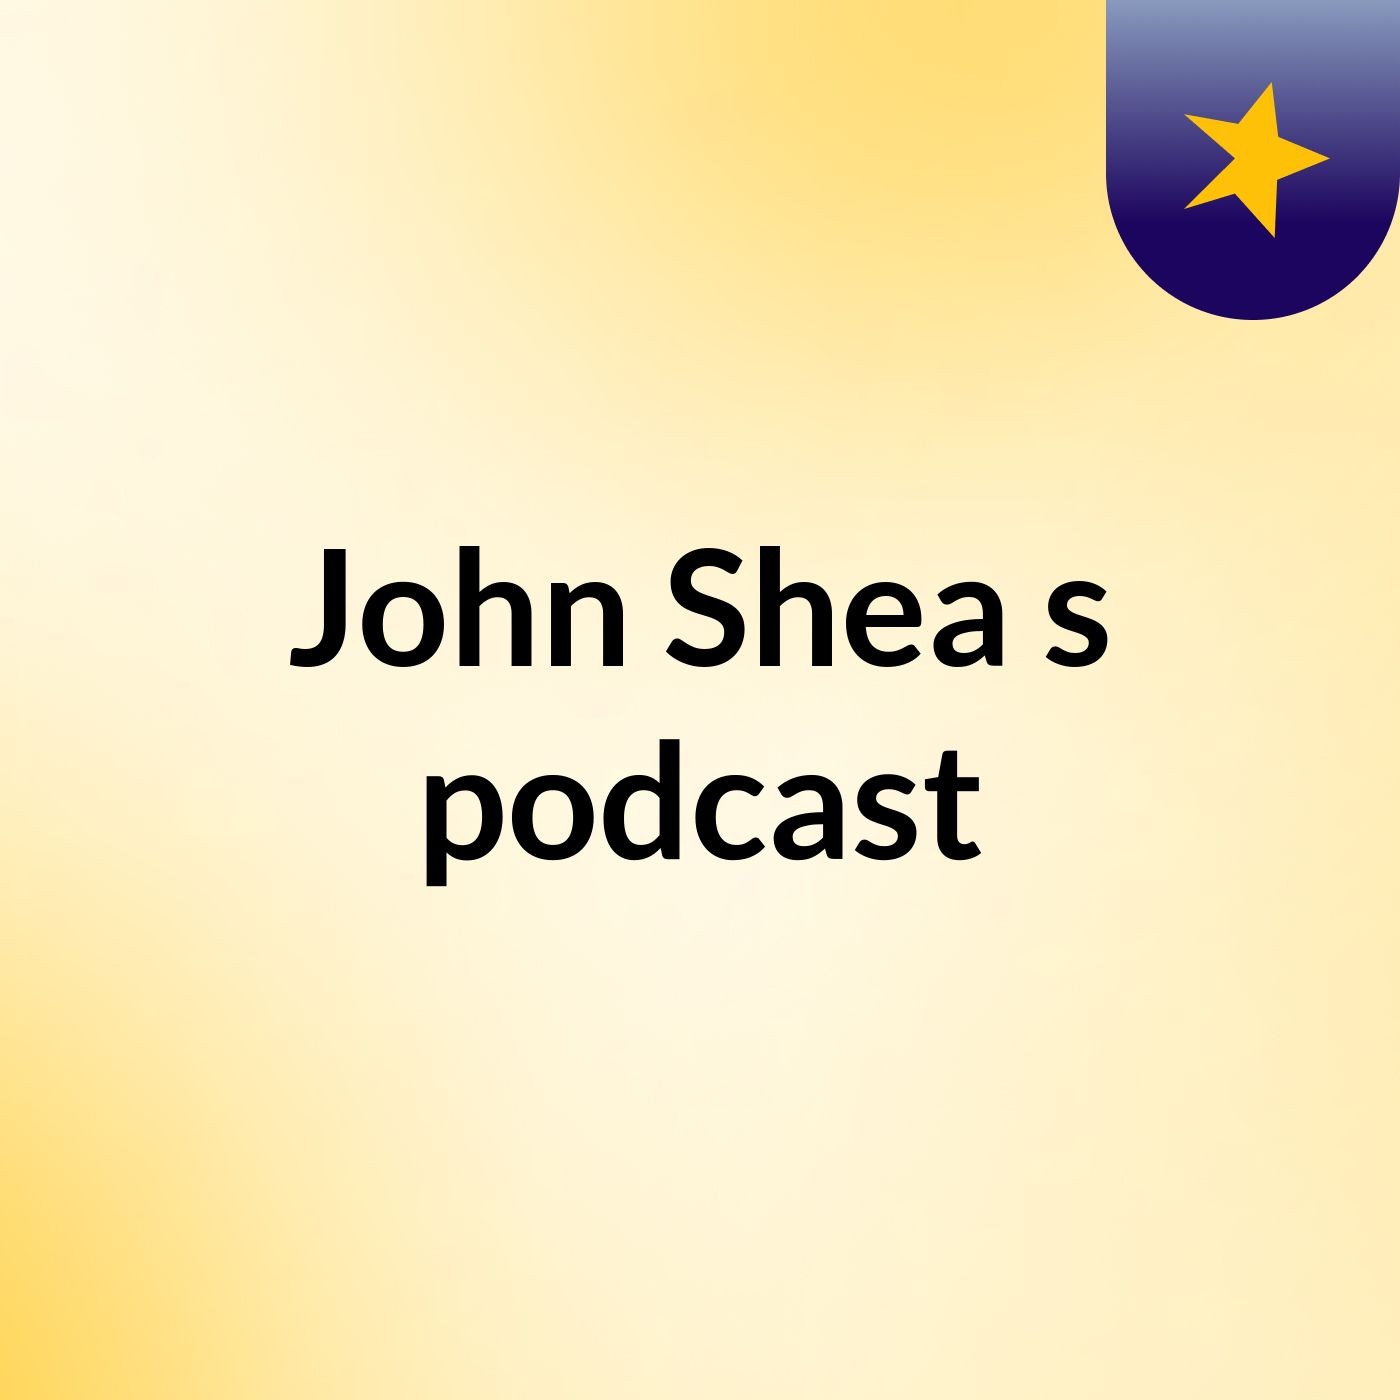 Episode 6 - John Shea's podcast